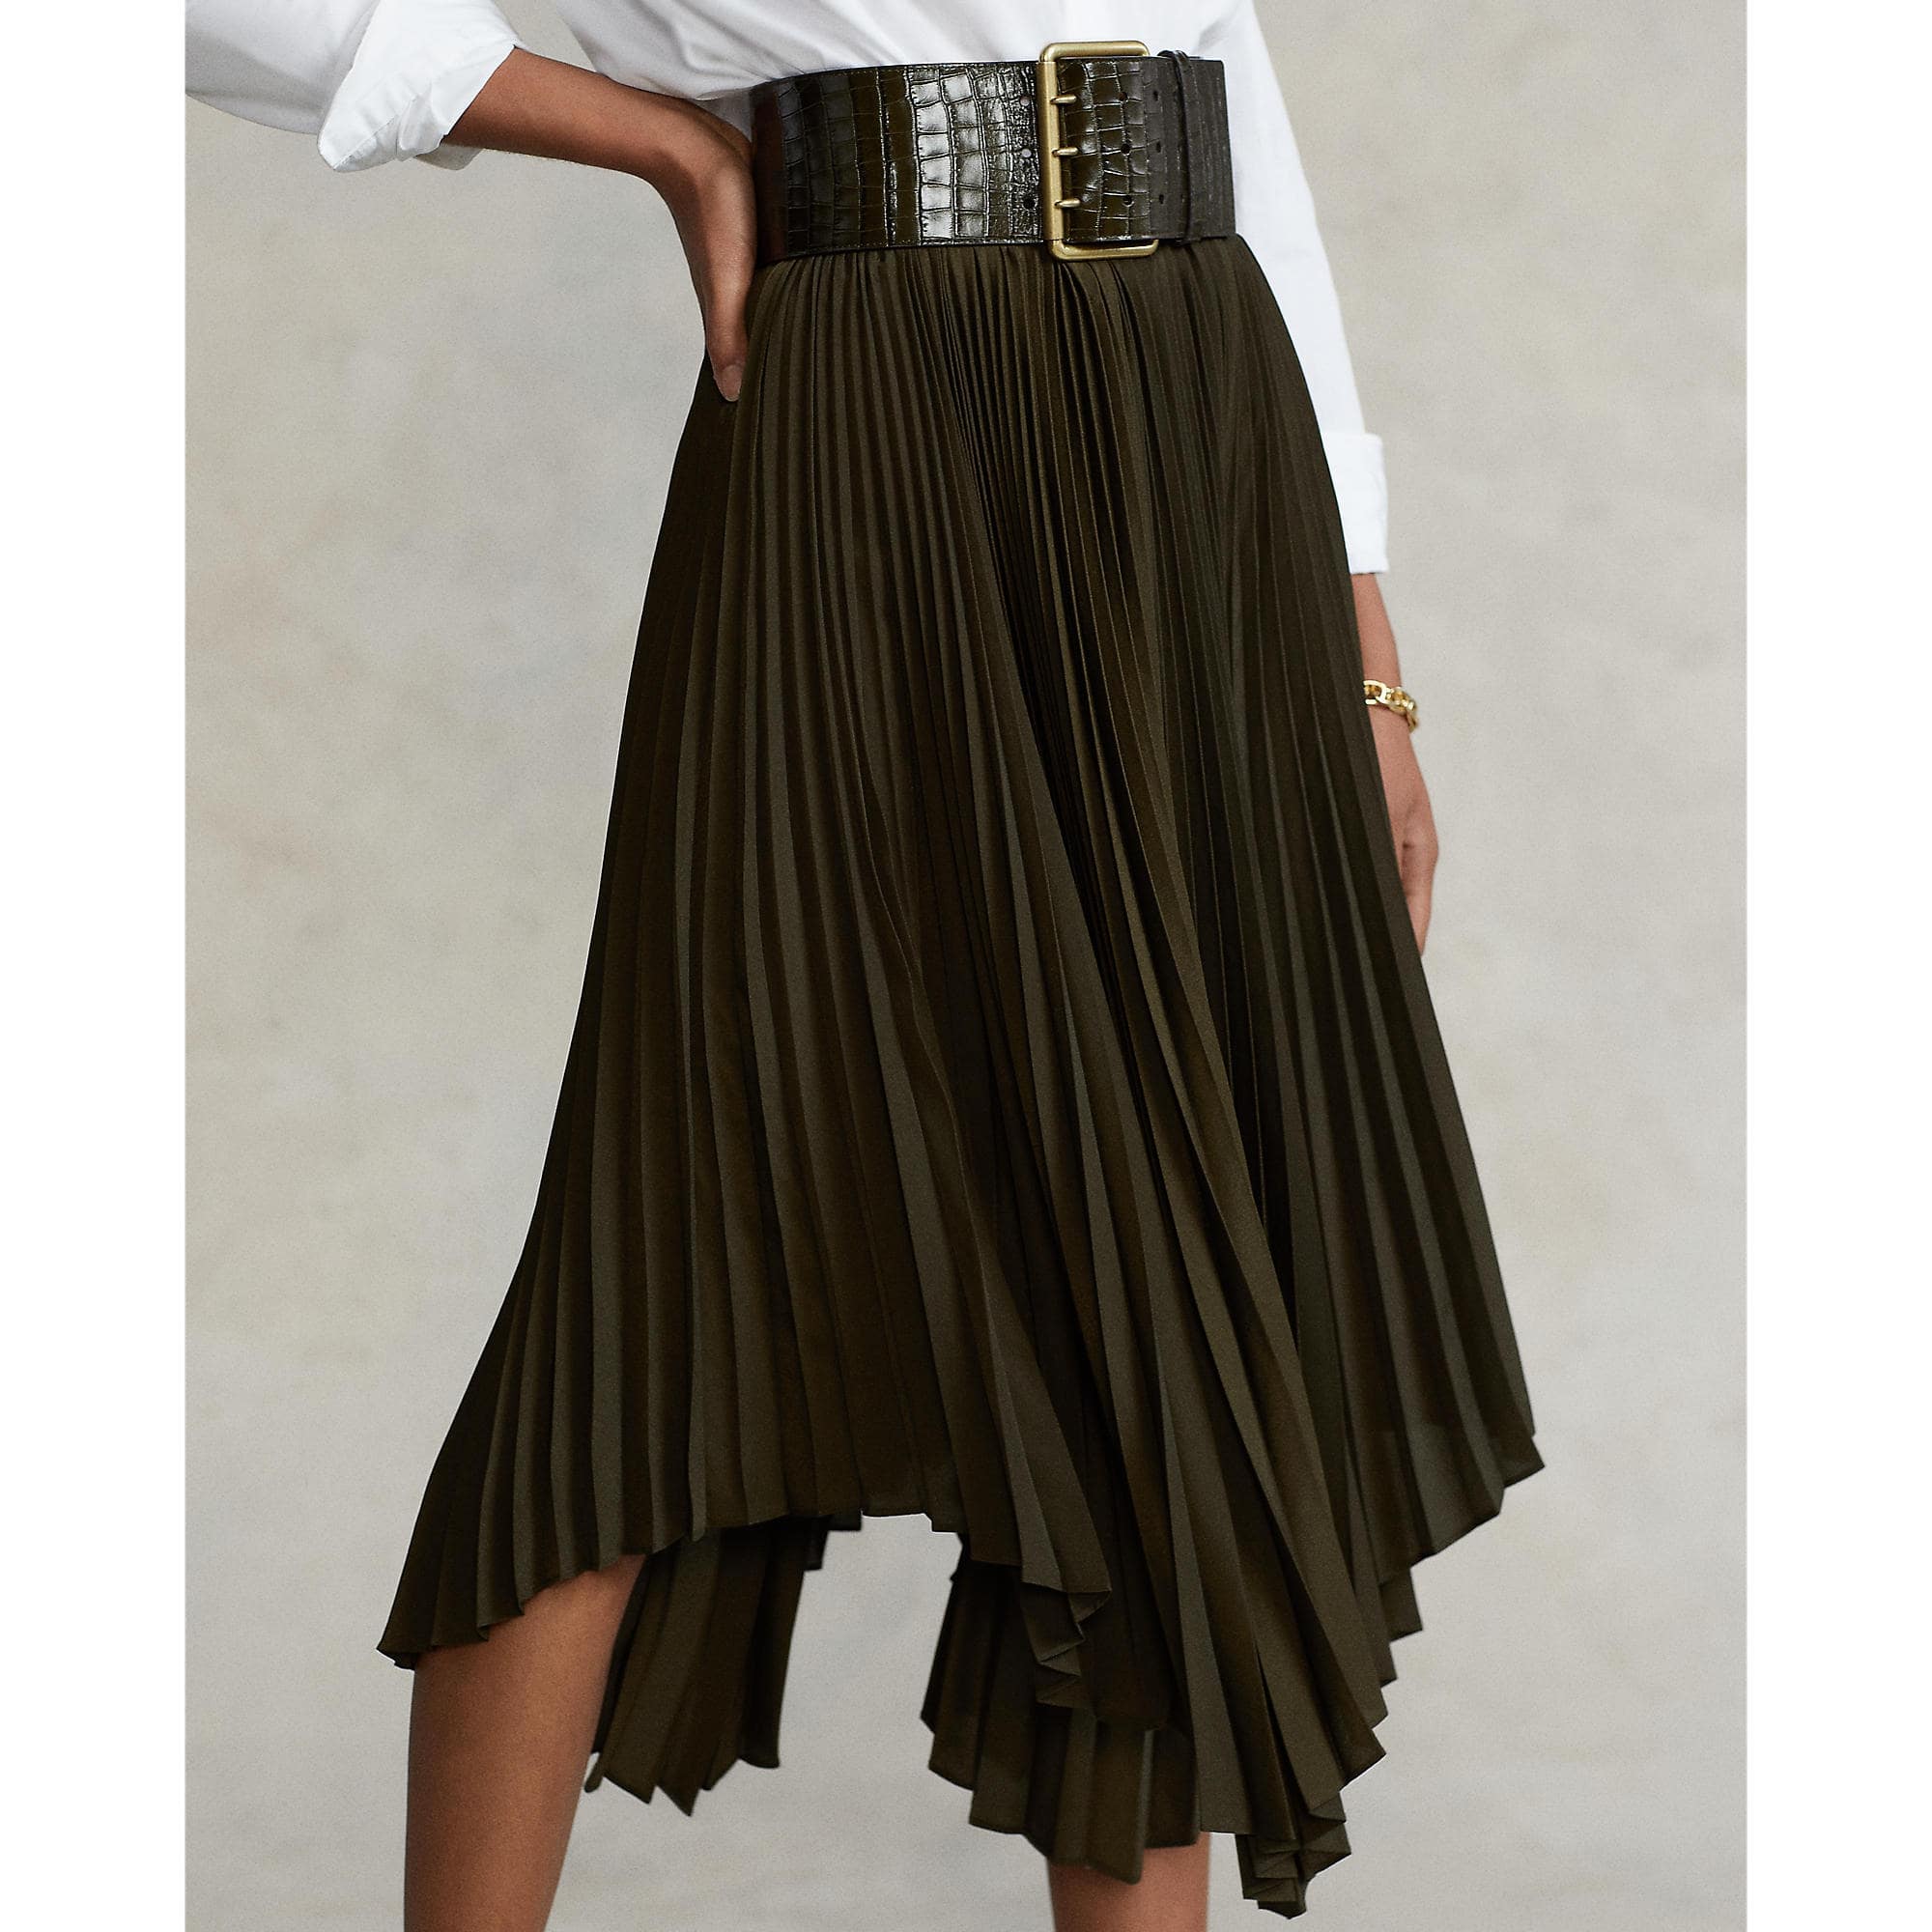 Buy online Breezy Georgette Handkerchief Skirt from Skirts